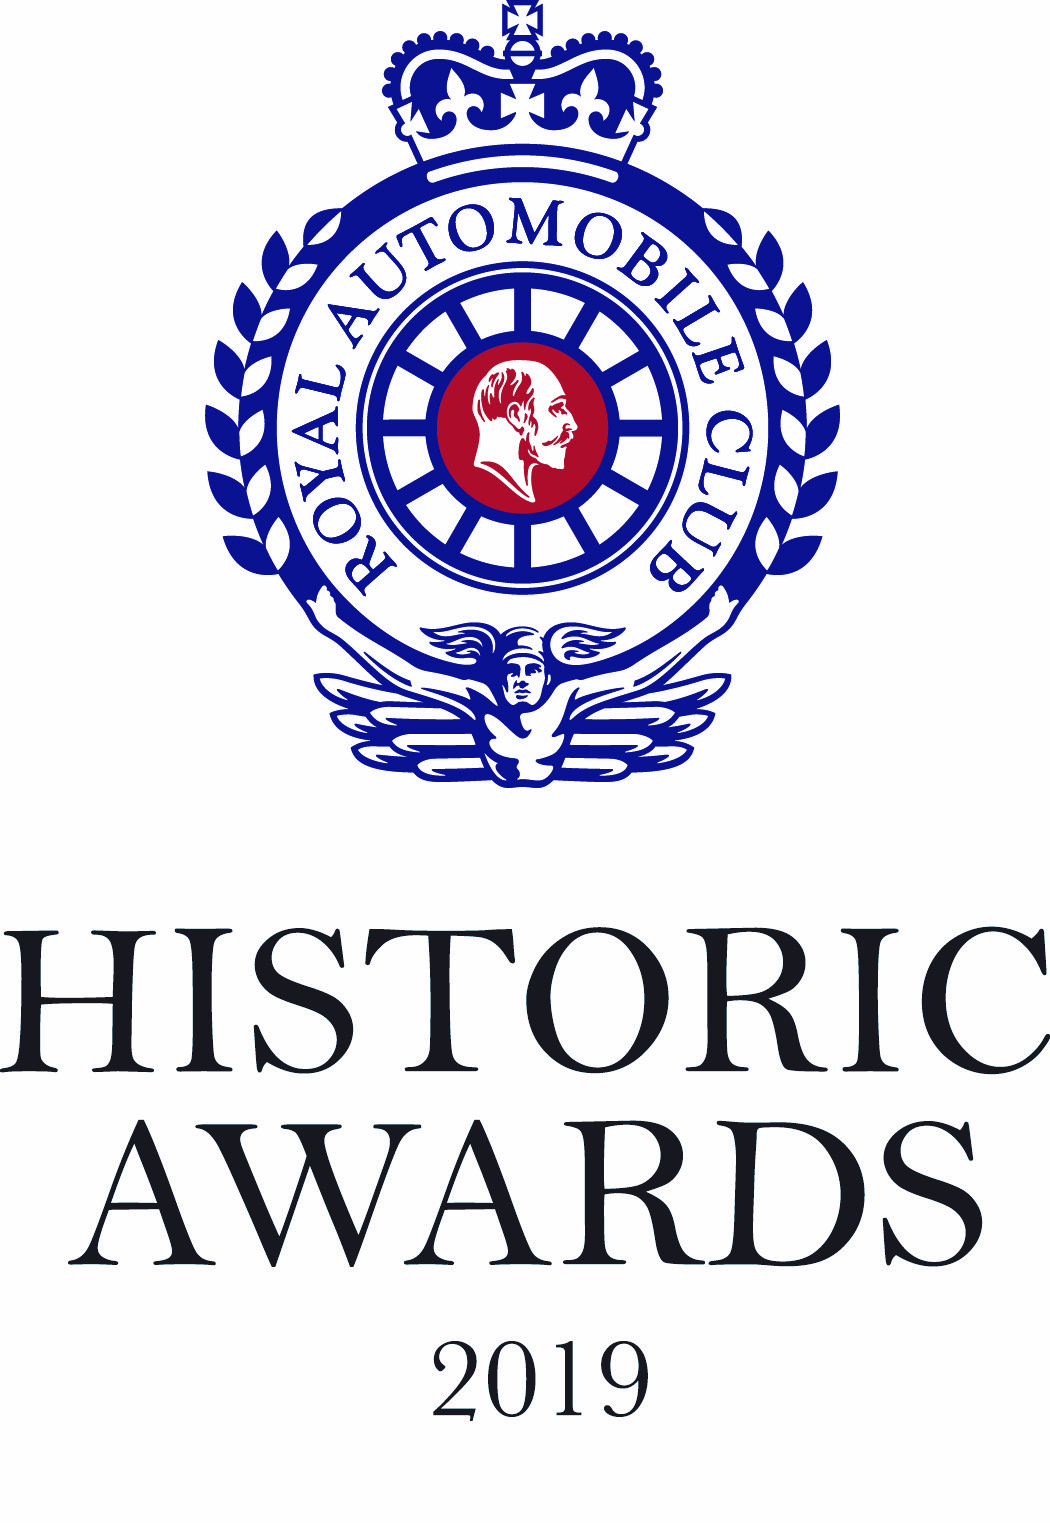 awards, Britain&#8217;s RAC launches historic awards program, ClassicCars.com Journal